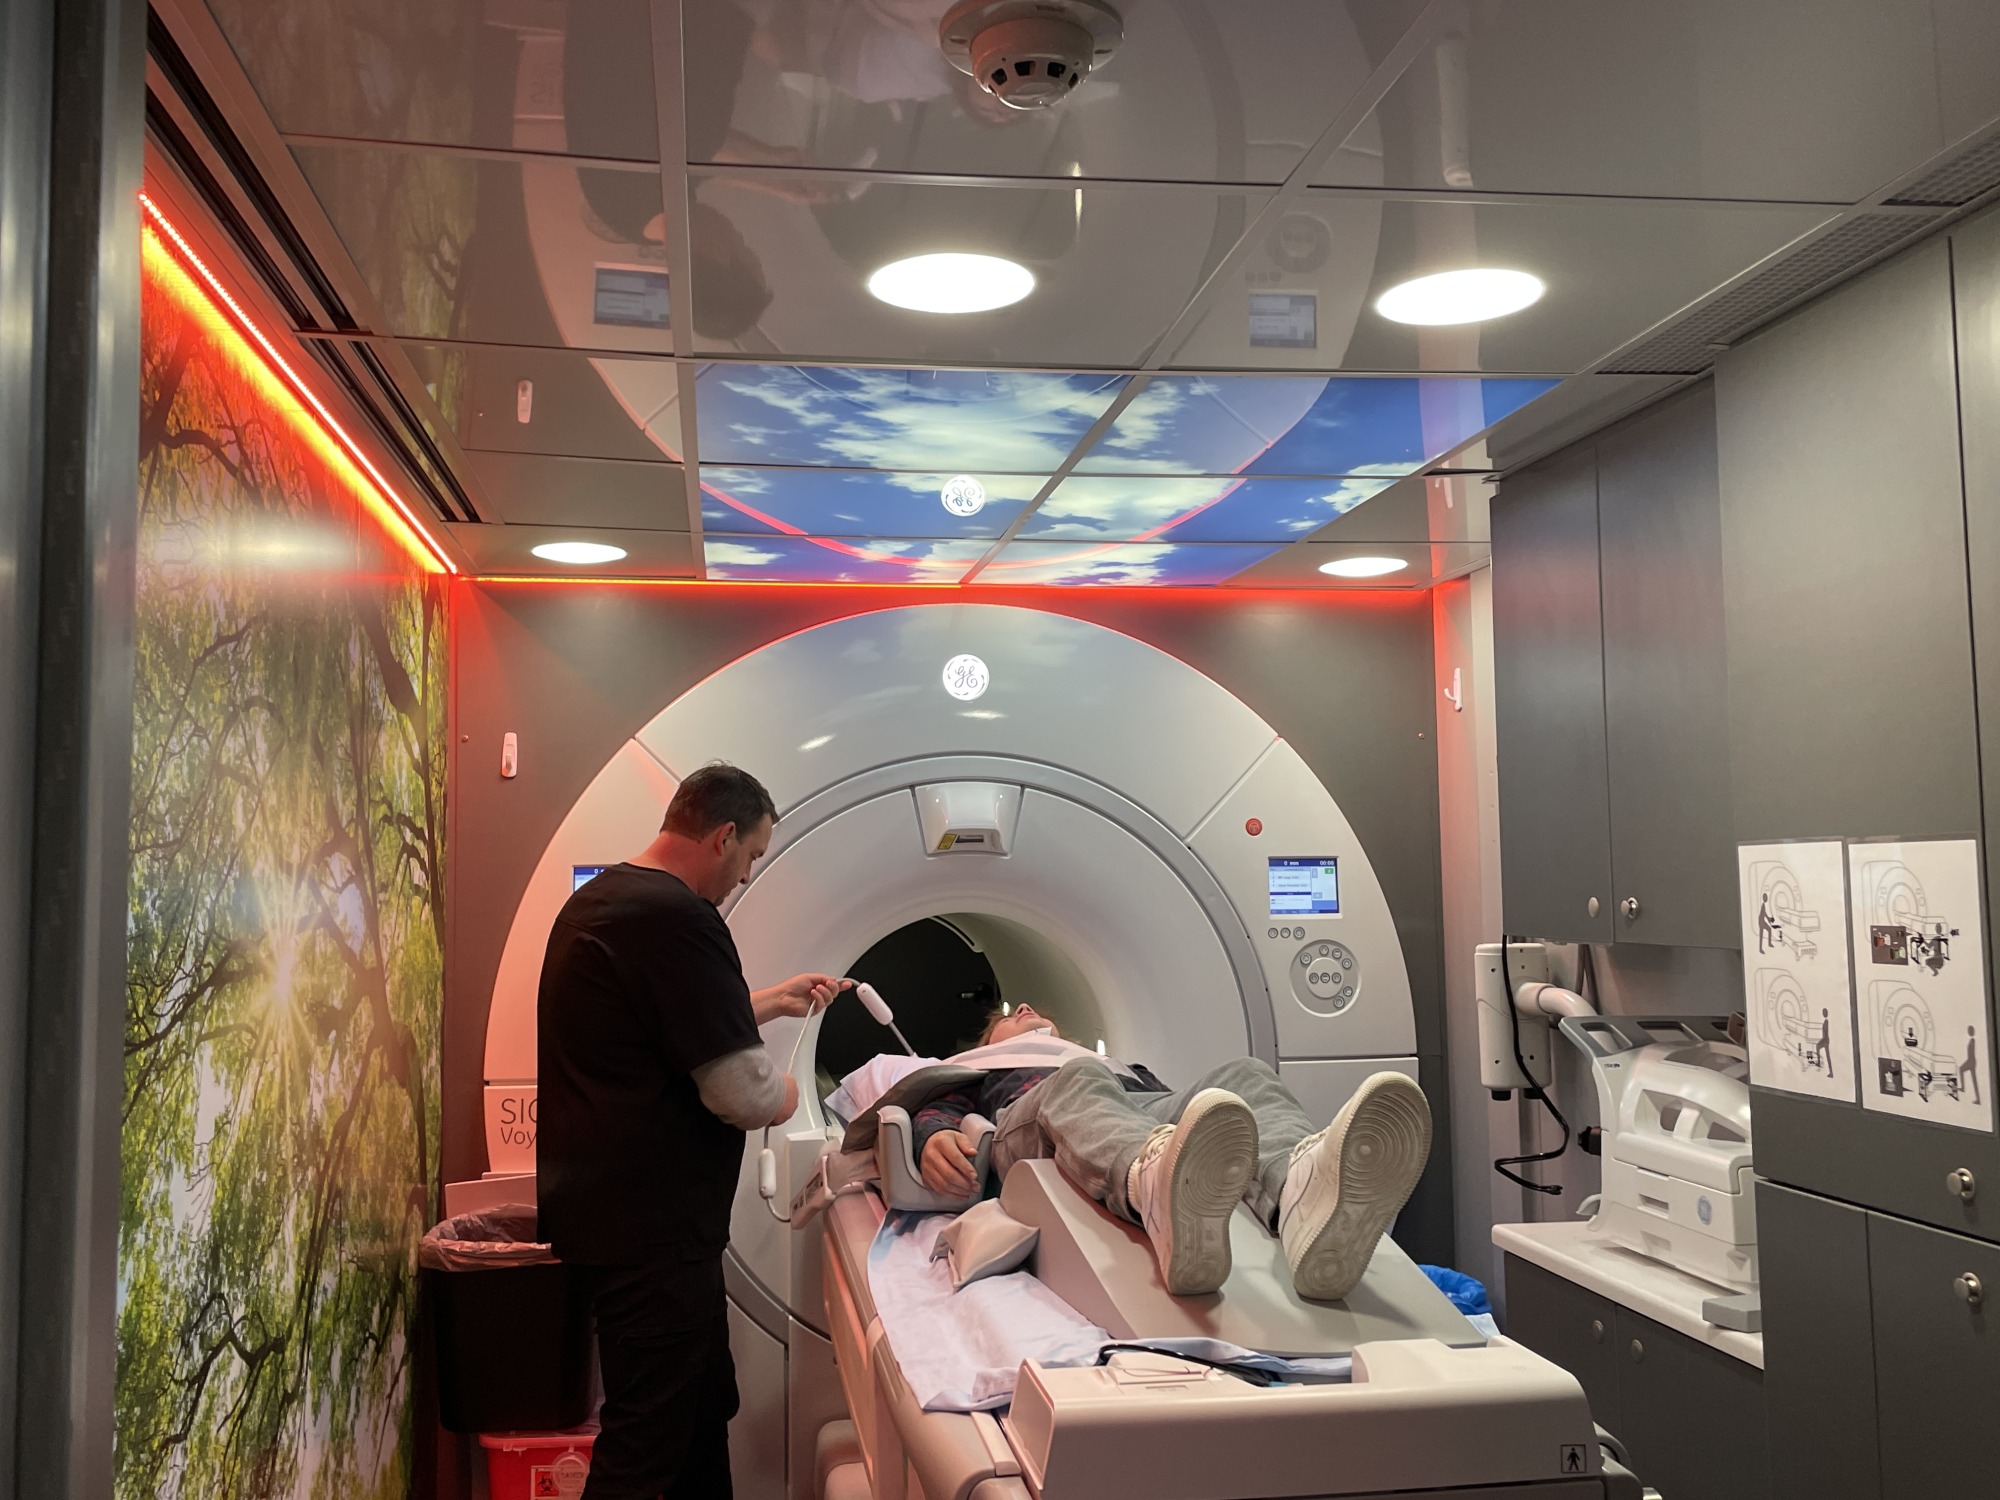 Revolutionary MRI Technology Available at VBCH. Van Buren County Hospital